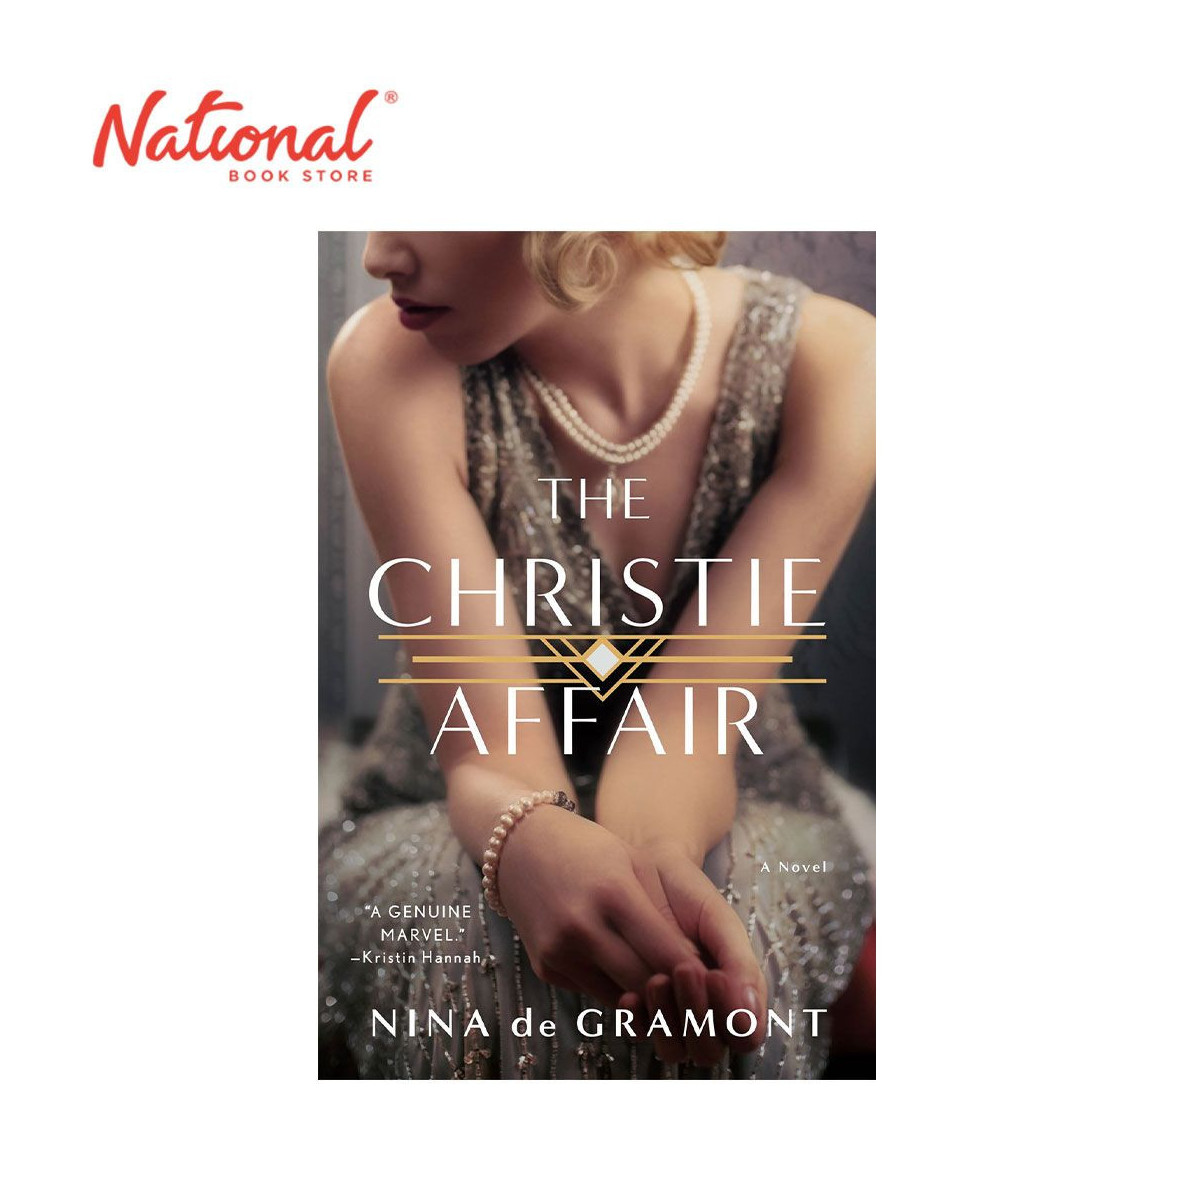 The Christie Affair by Nina de Gramont - Trade Paperback - Thriller, Mystery & Suspense